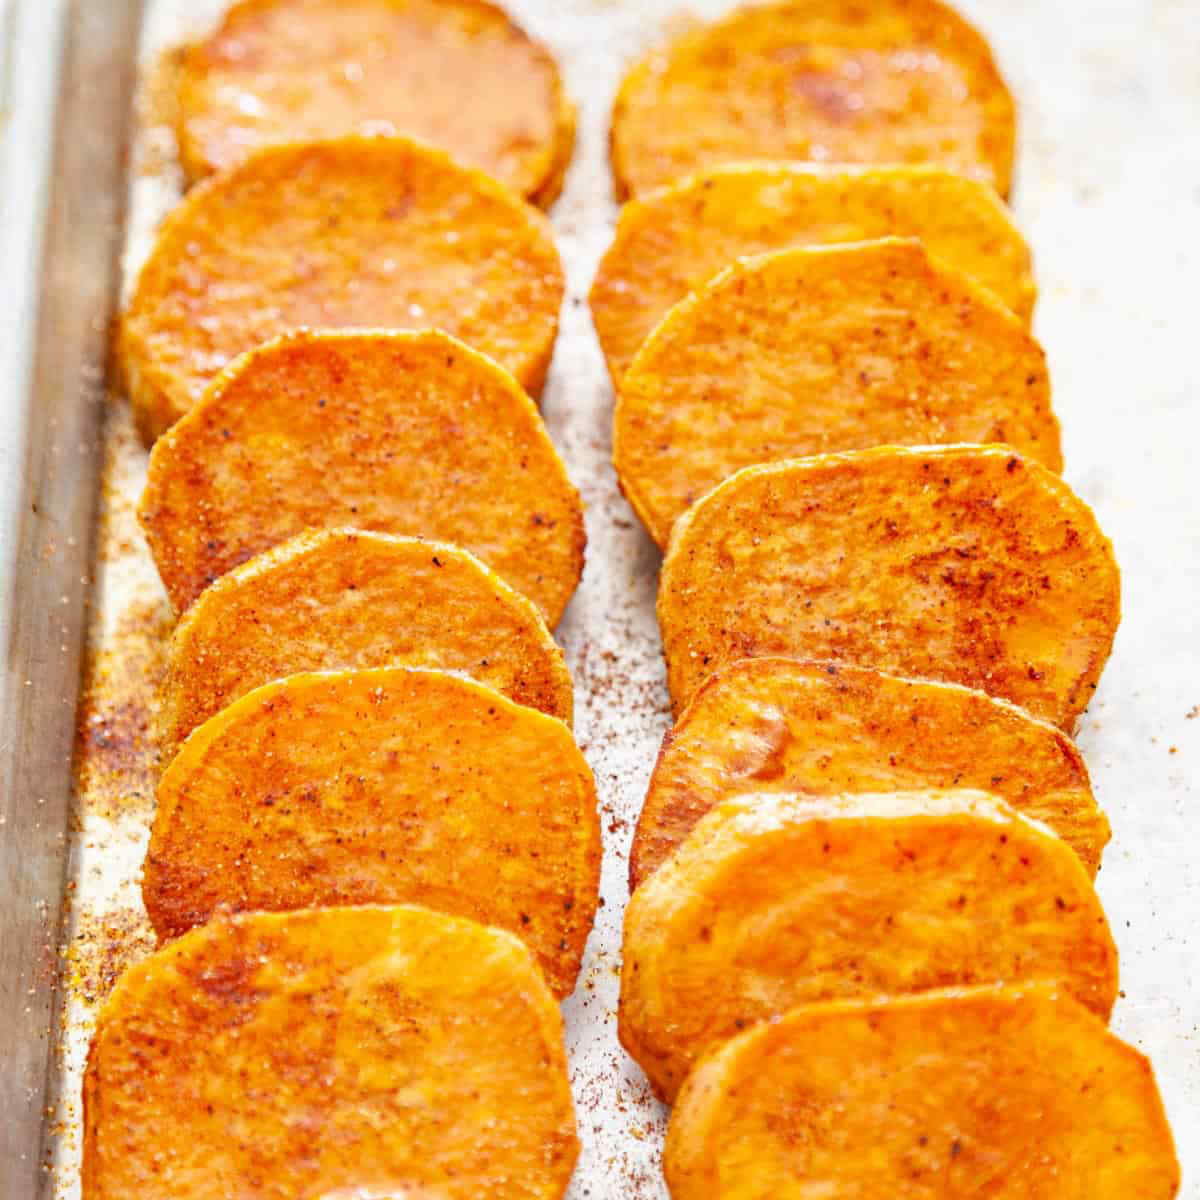 Baked Sweet Potato Slices with Seasoning